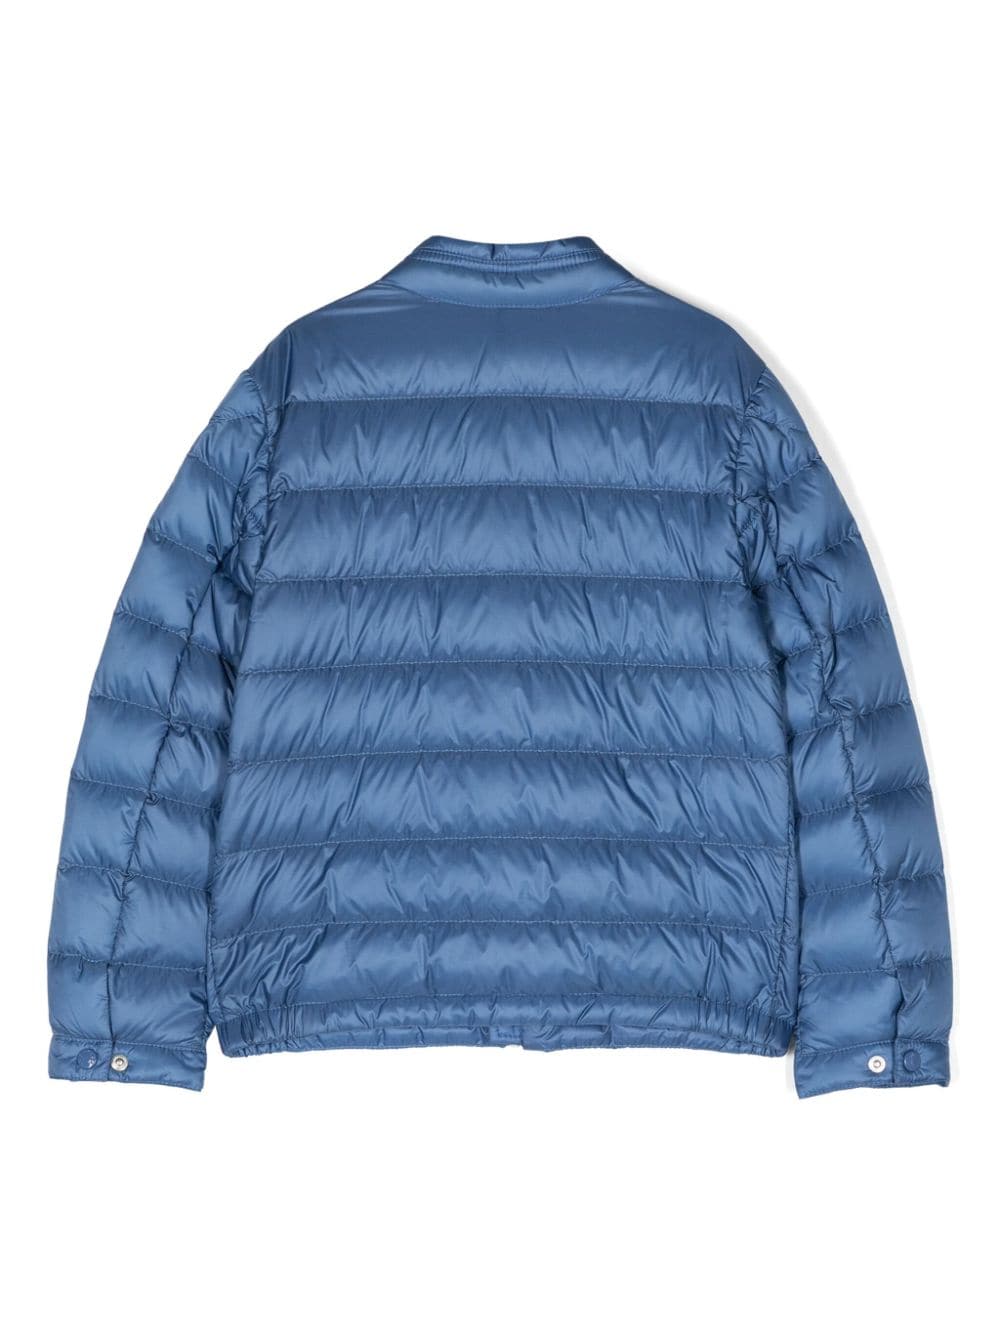 Moncler Enfant Acorus quilted down jacket - Blauw